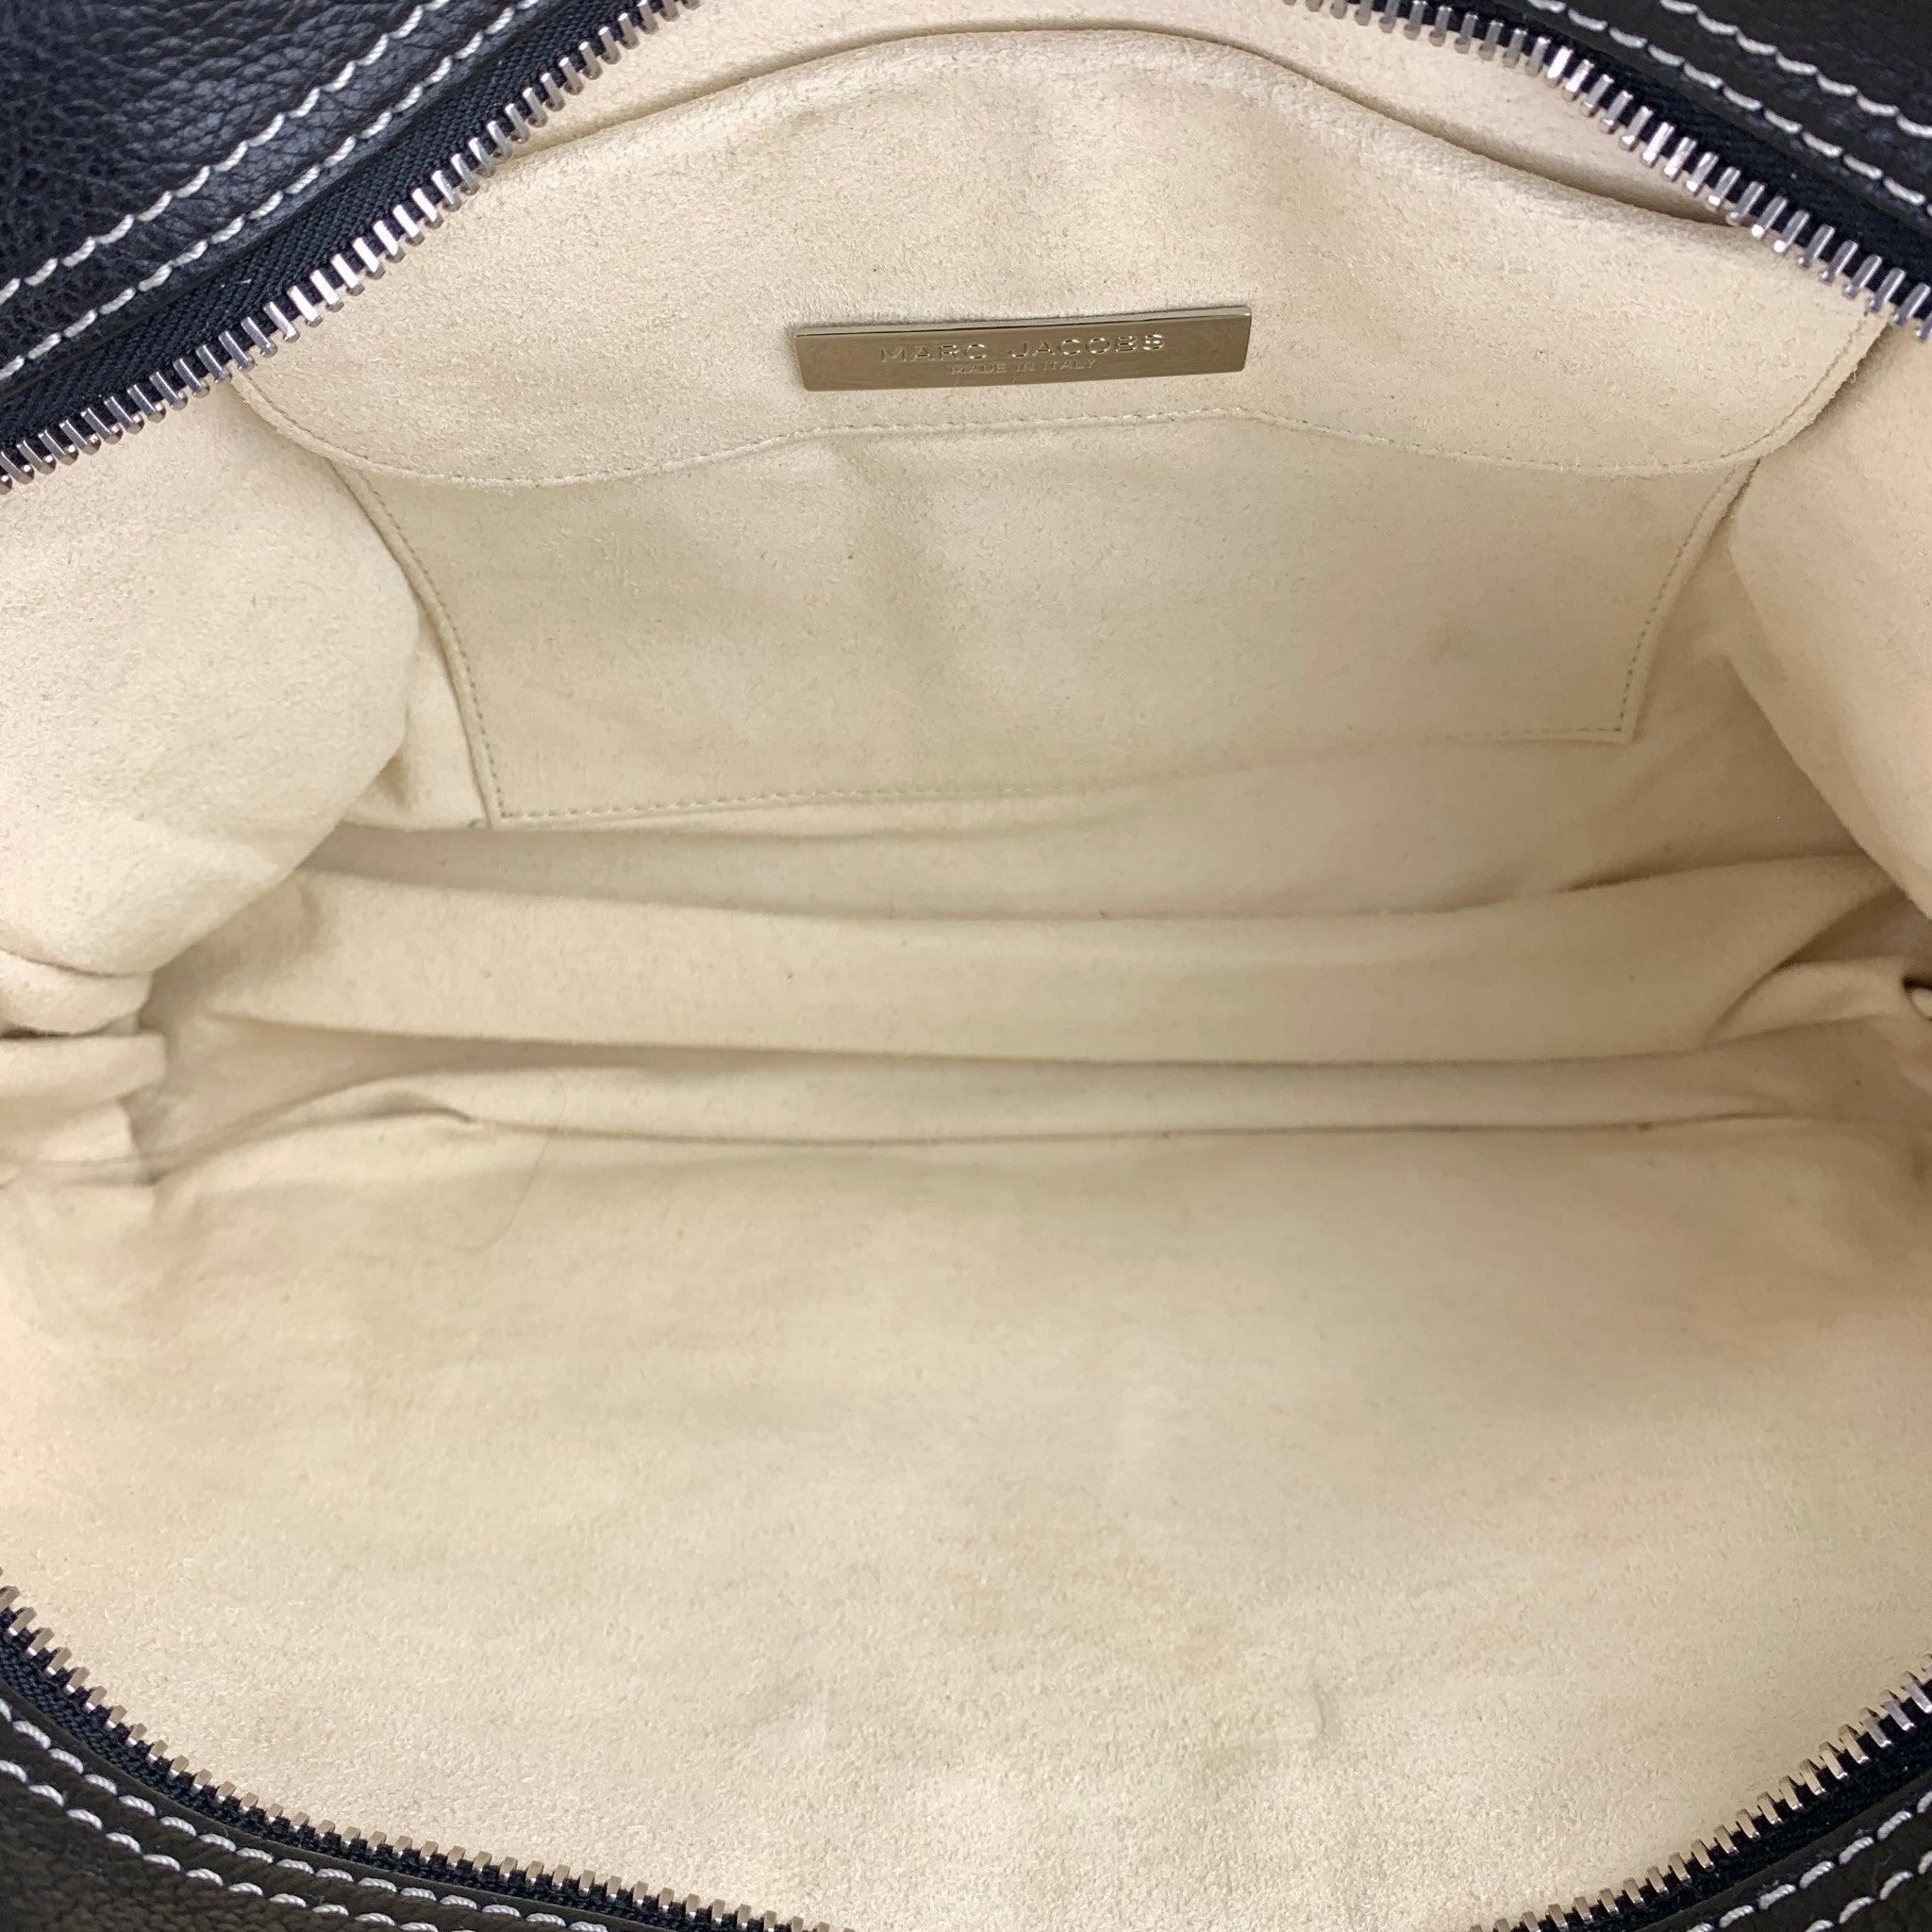 MARC JACOBS Black Contrast Stitching Leather Top Handles Handbag For Sale 3